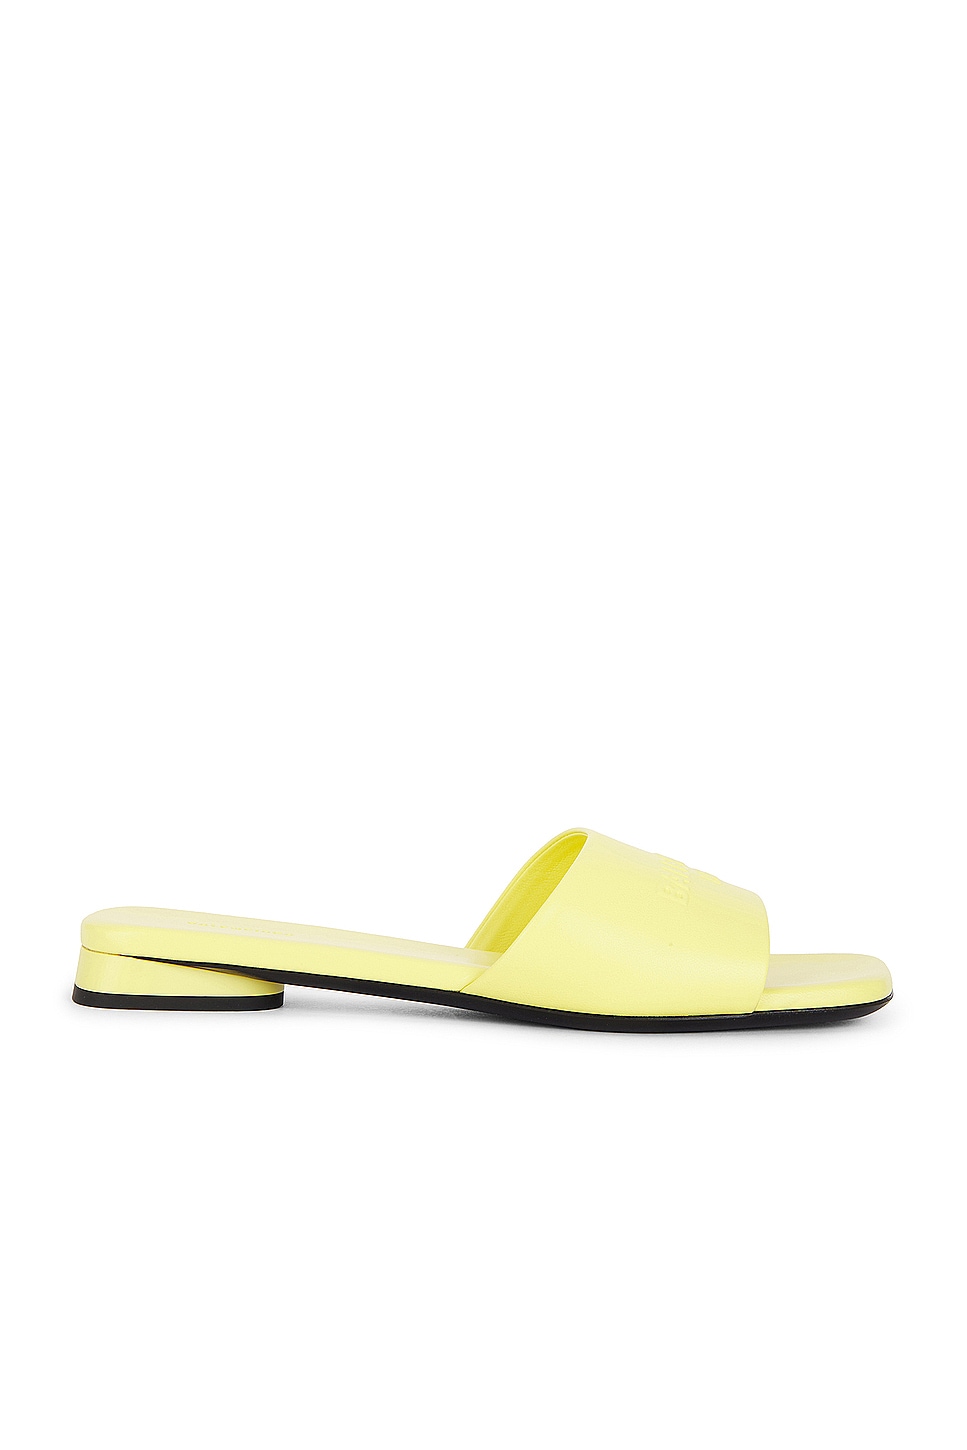 Dutyfree Sandal in Yellow